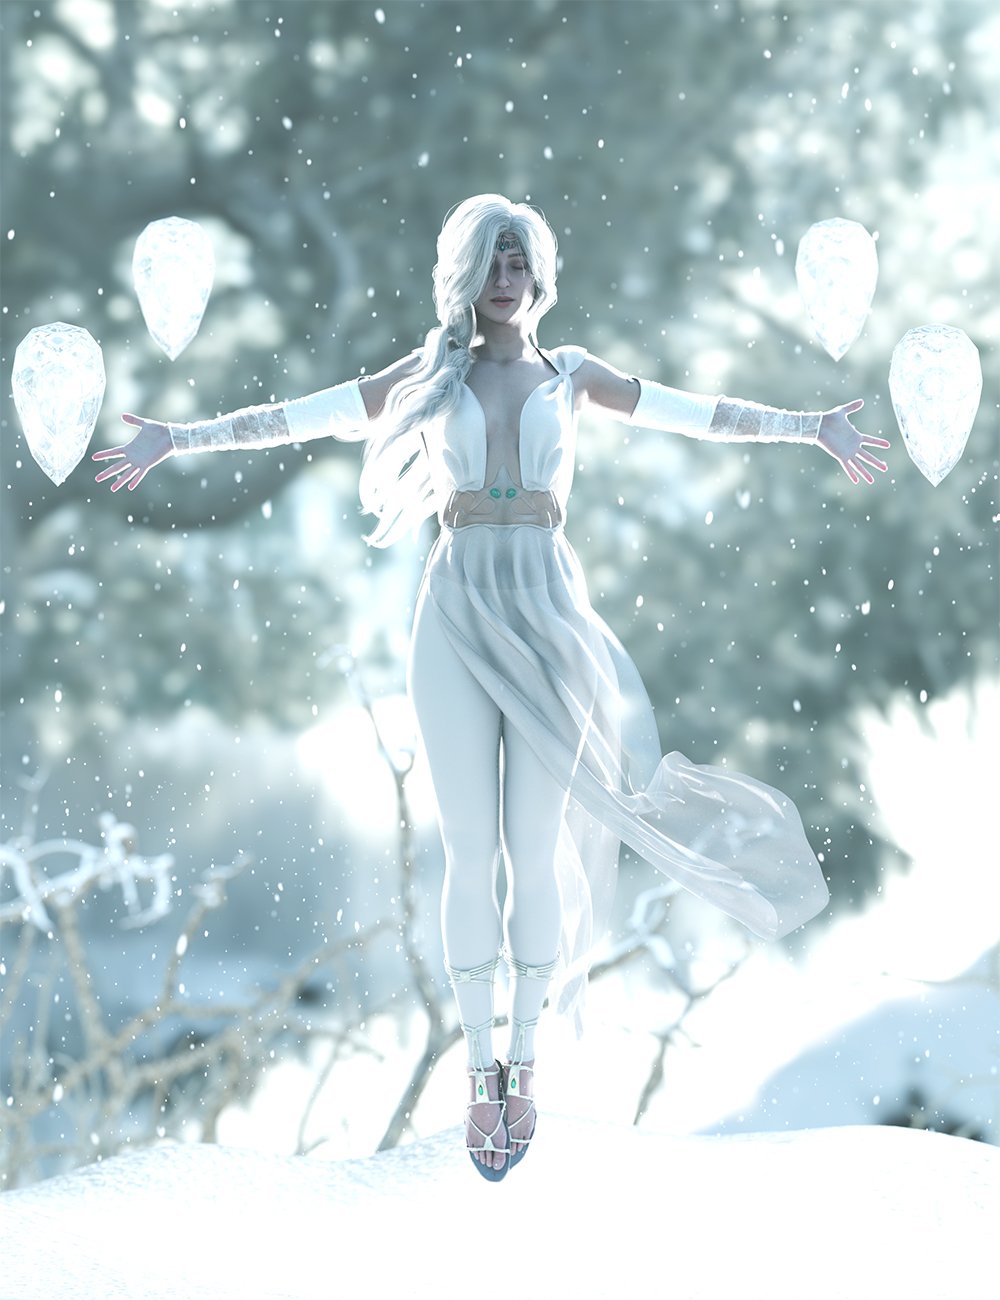 Winter Wonderland Photoshoot Poses